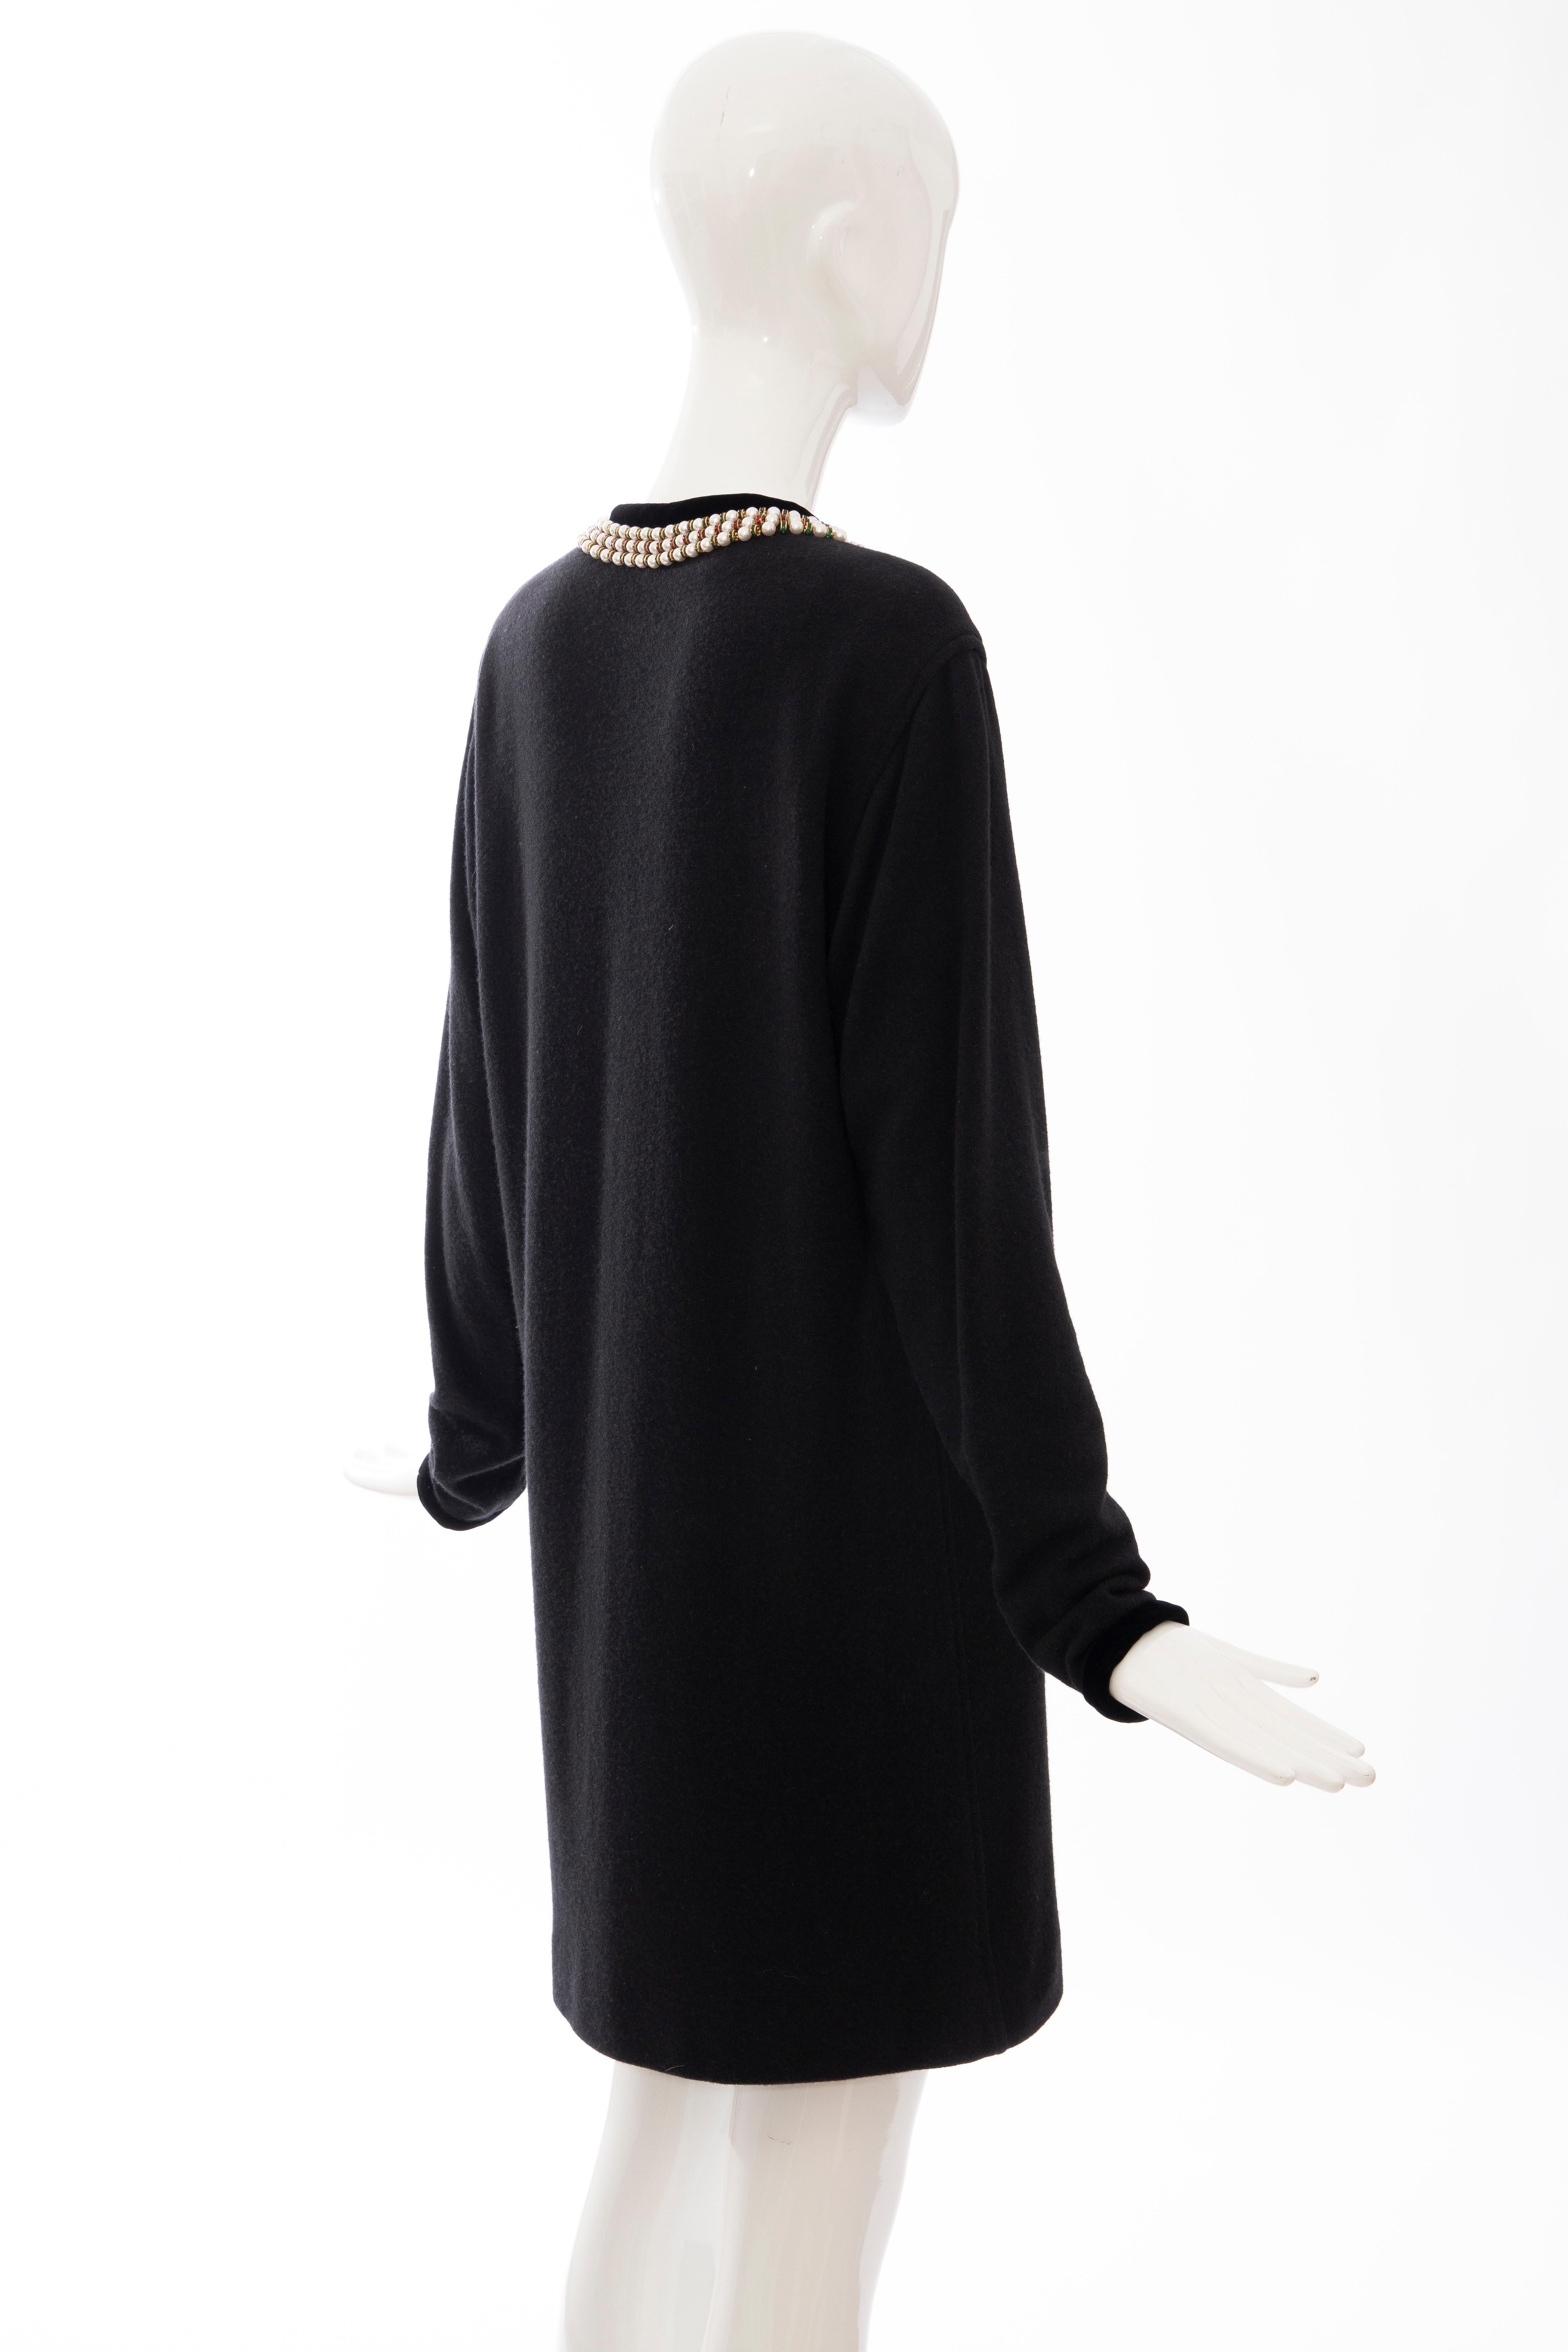 Oscar de la Renta Runway Black Embroidered Neckline Sweater Dress, Fall 1984 For Sale 1